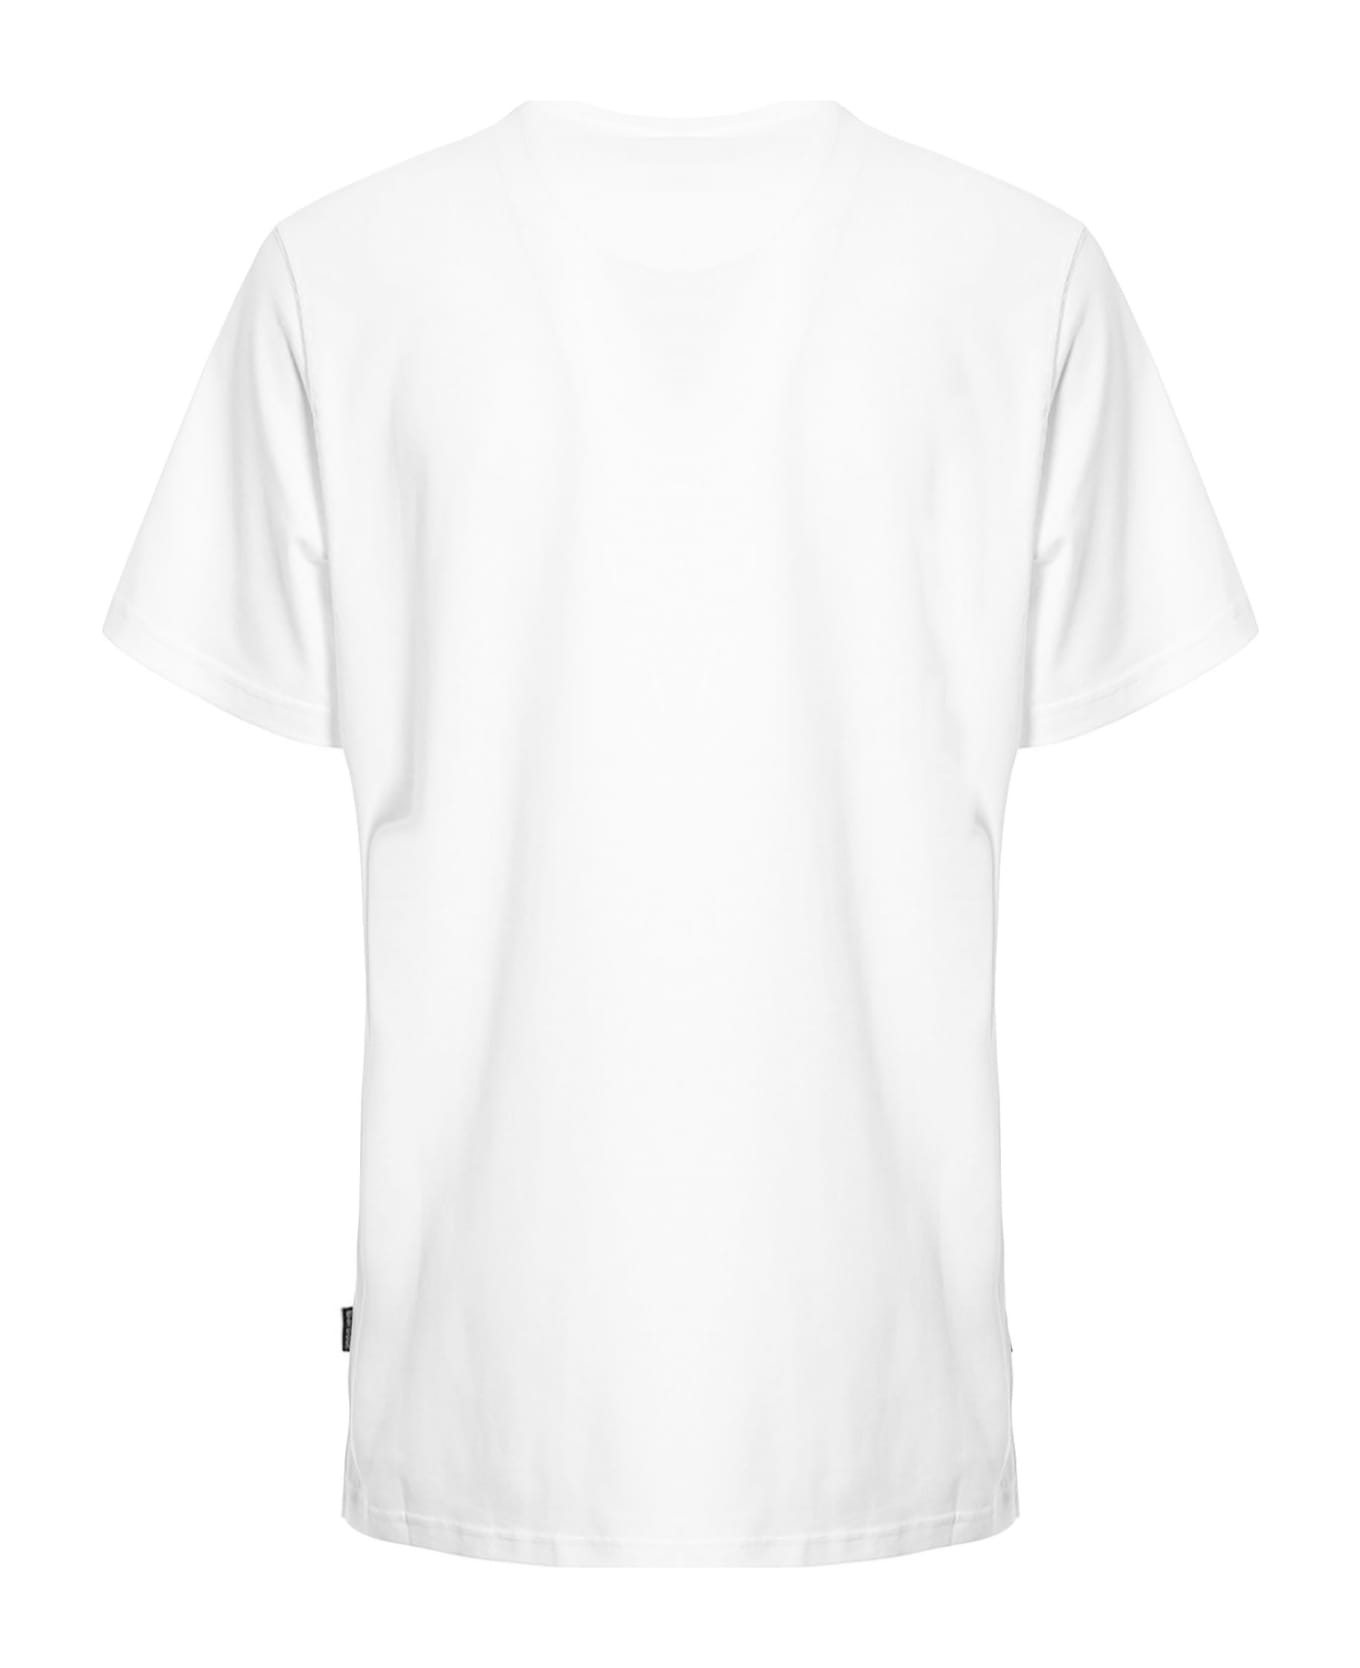 Barbour White Cotton T-shirt - White